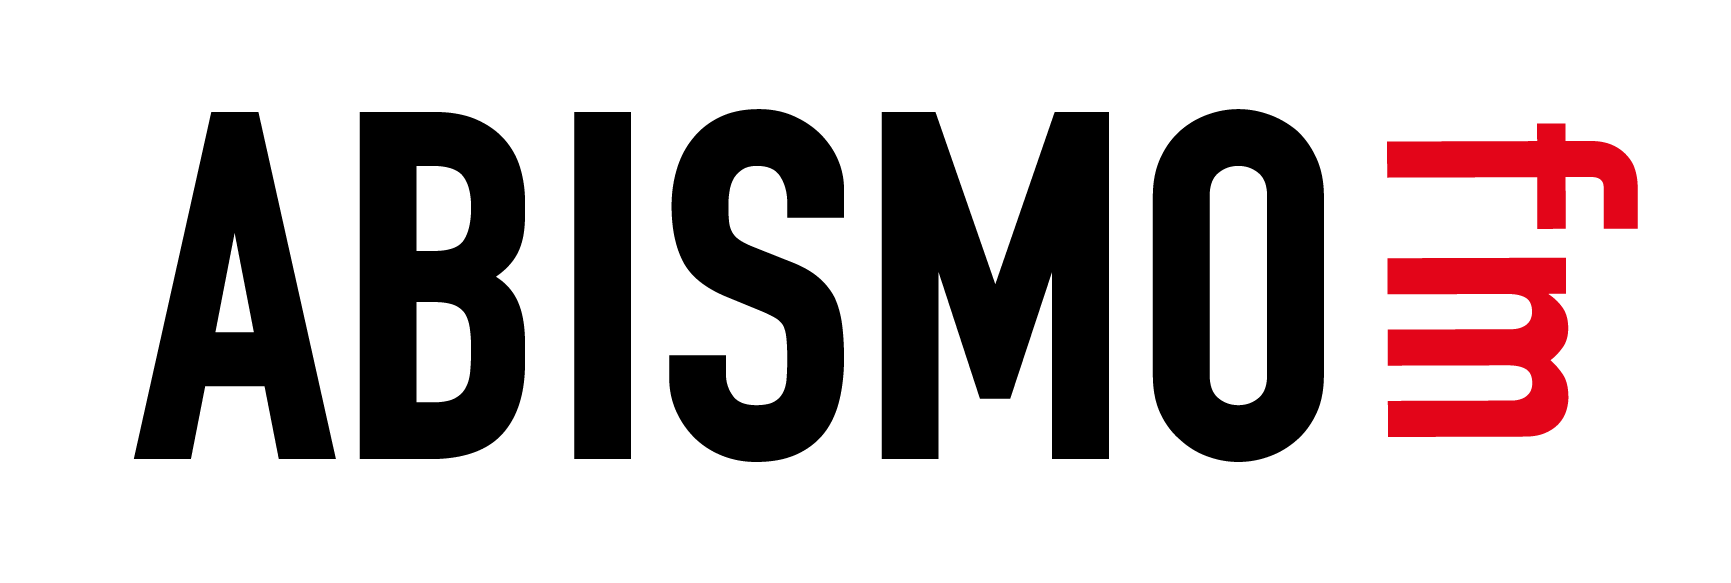 Abismofm logo